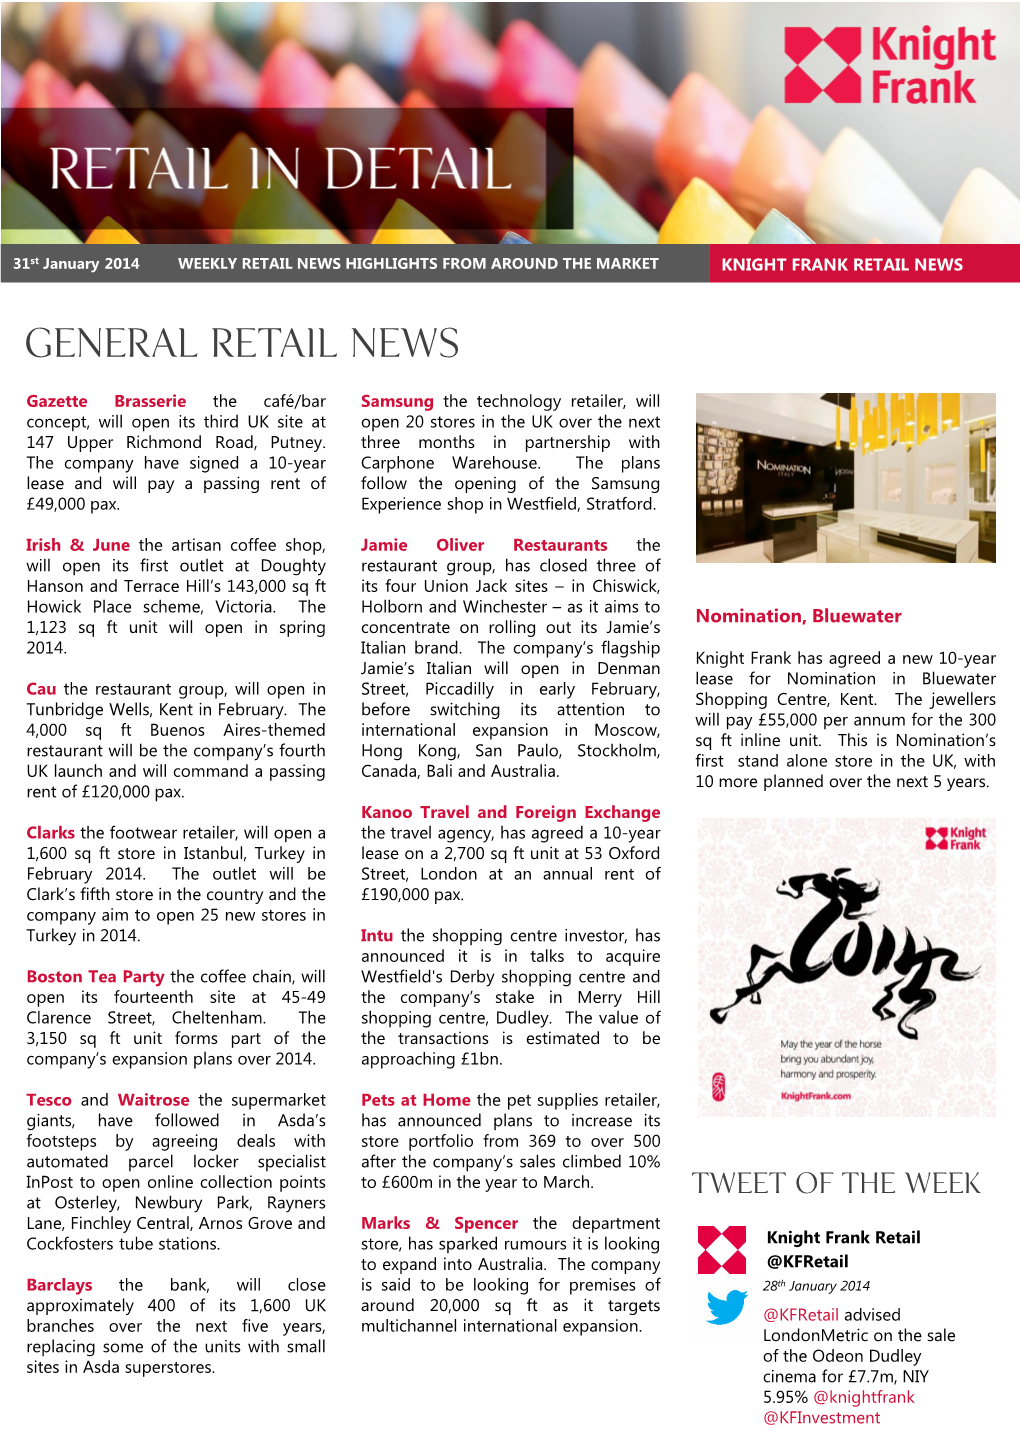 General Retail News